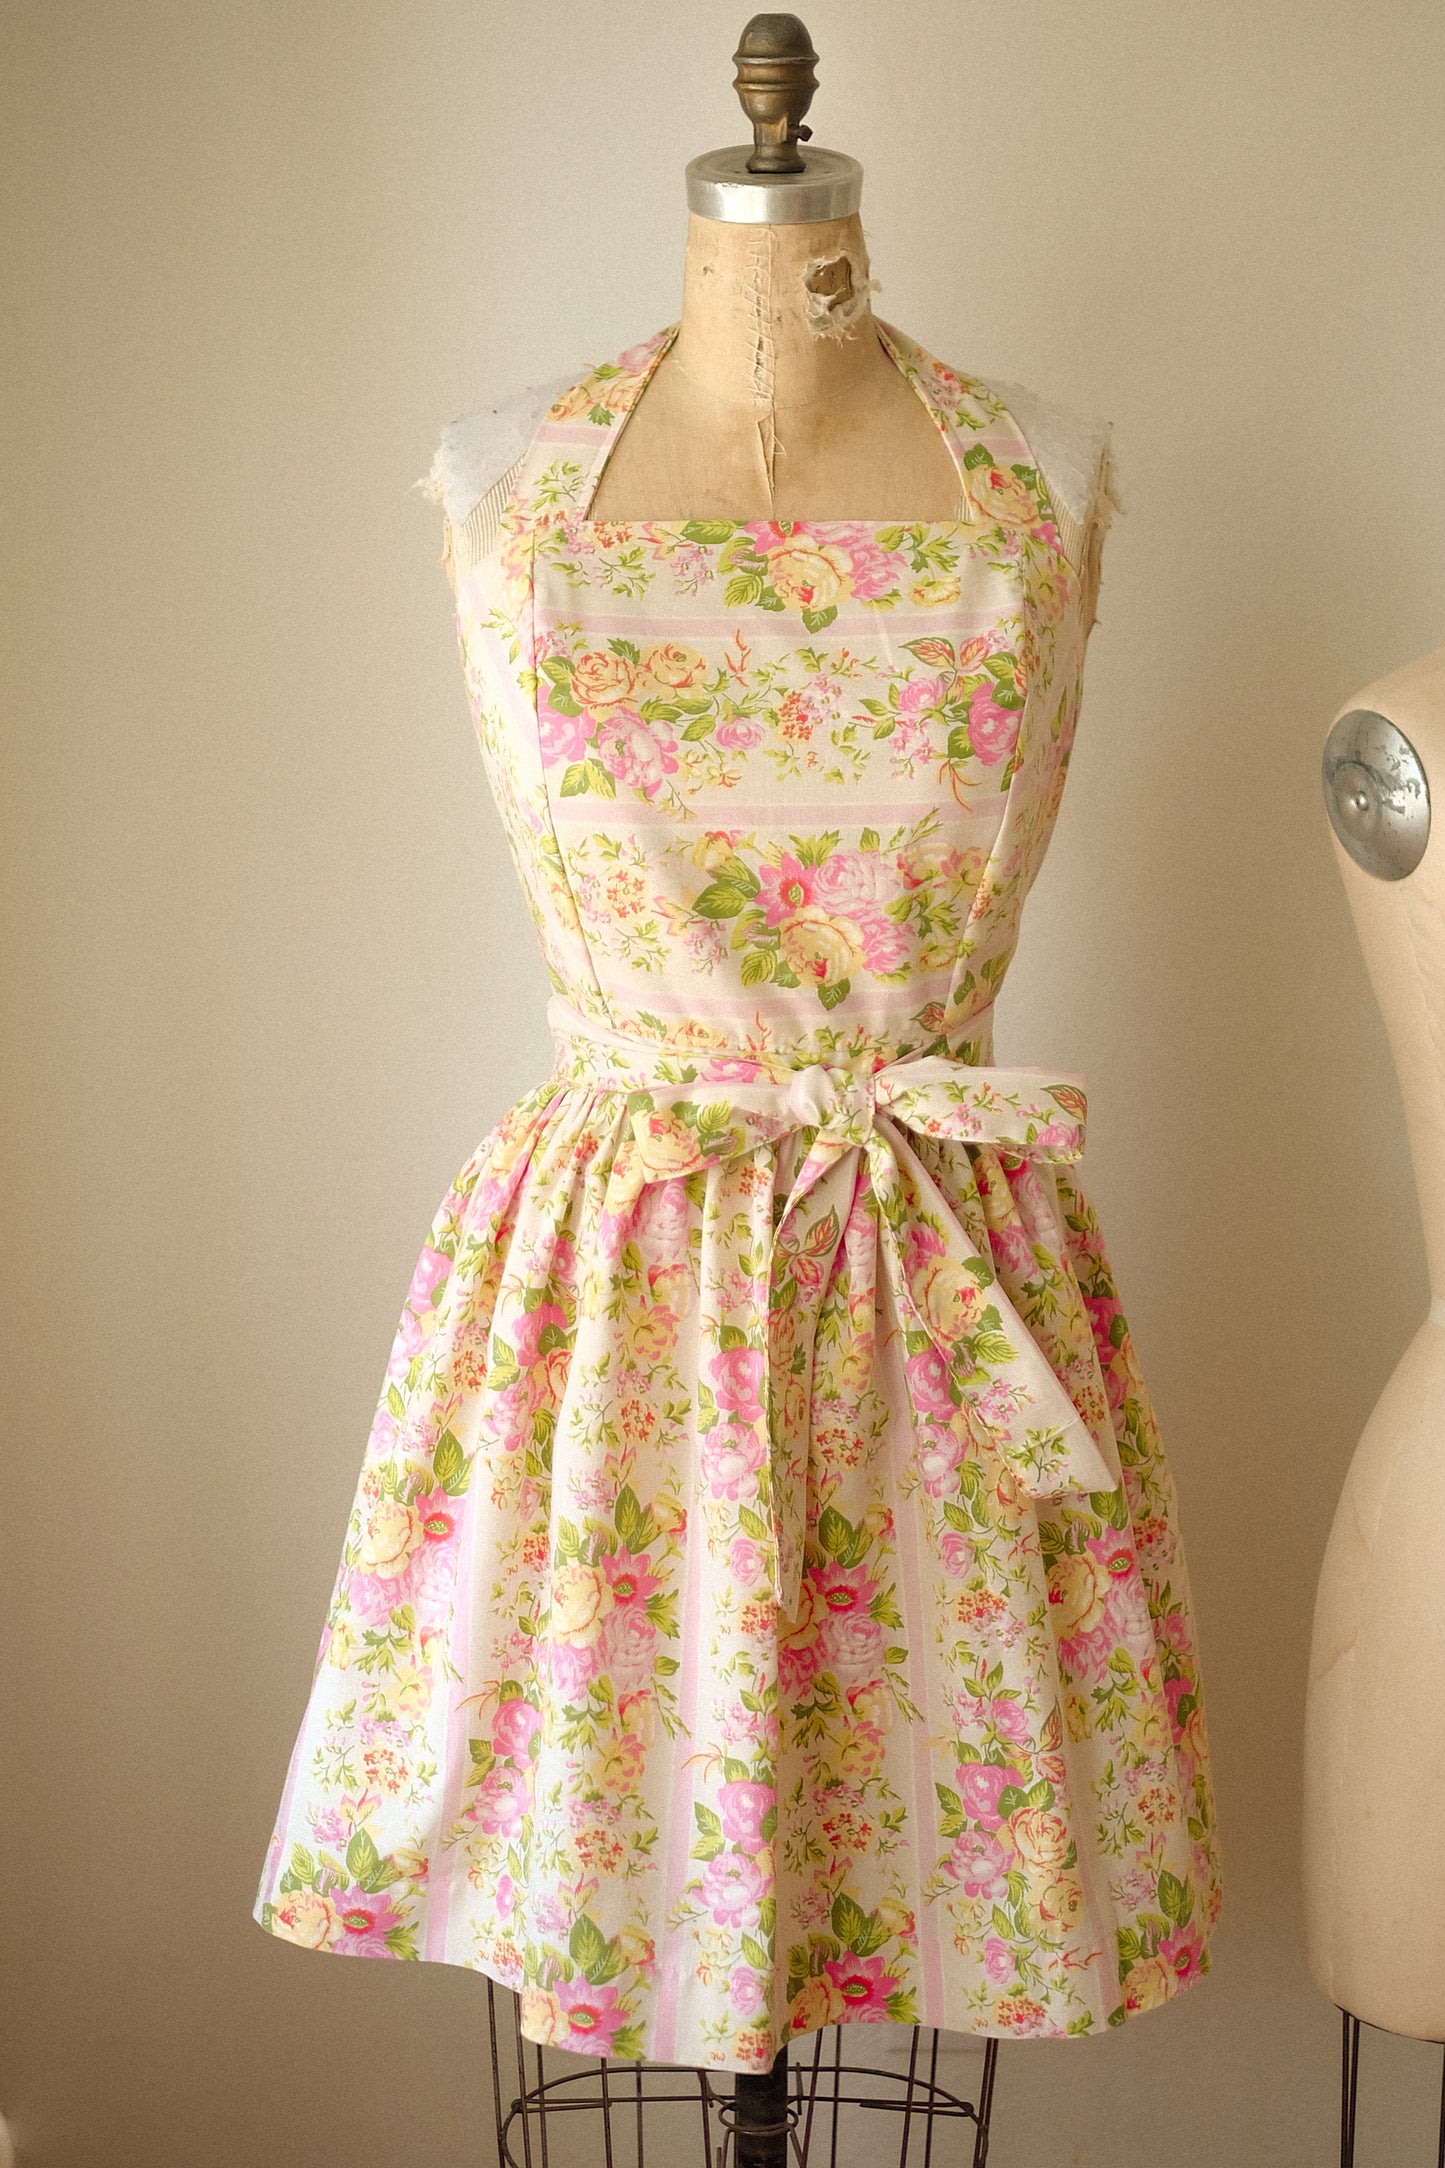 Handmade vintage apron - Darling ♡